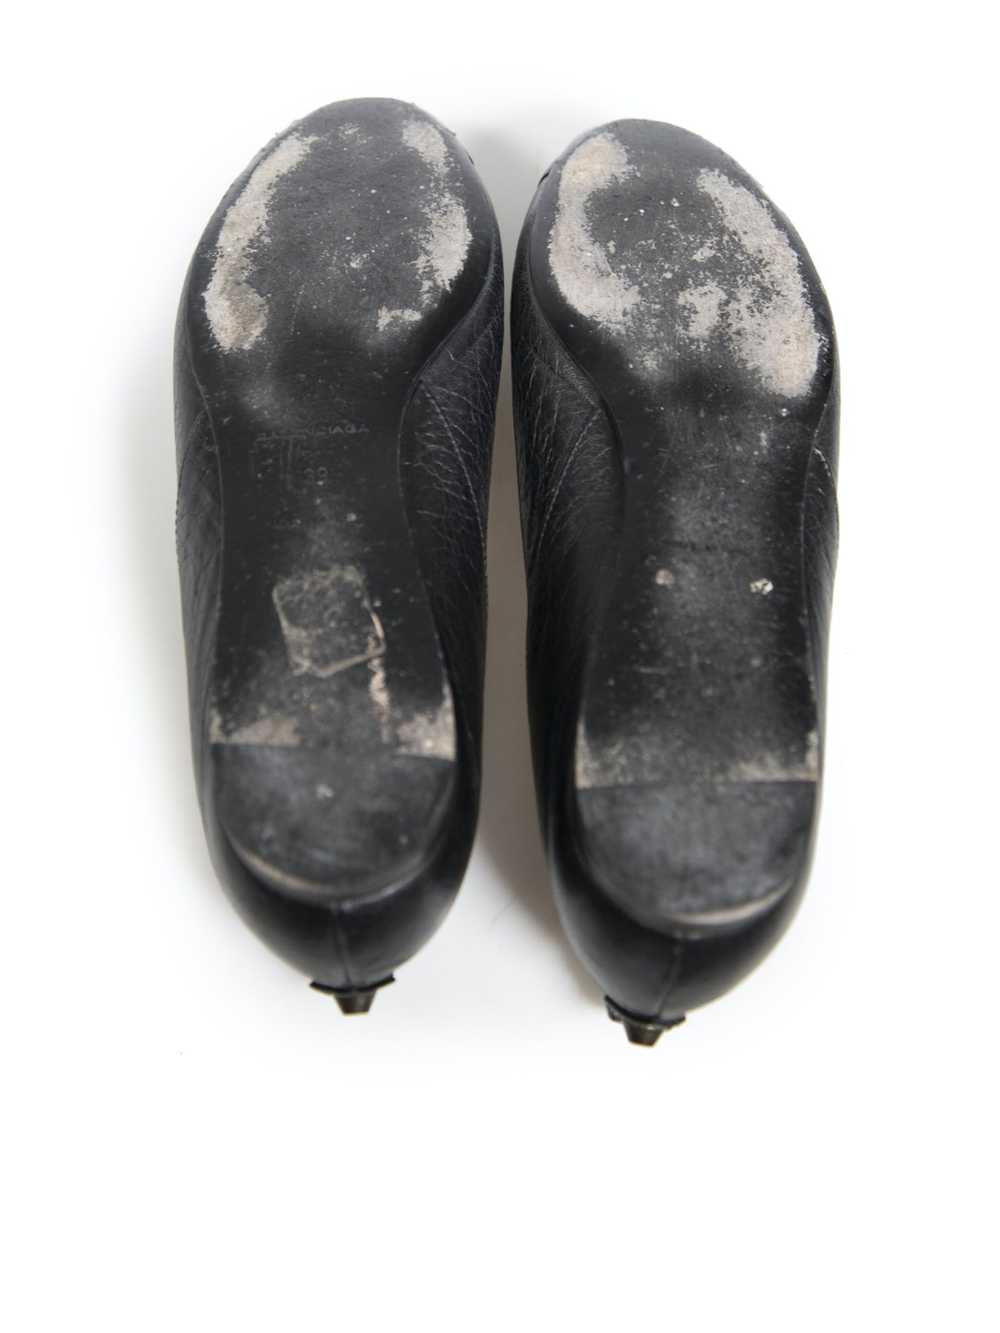 Balenciaga Black Leather Stud Detail Ballet Flats - image 4